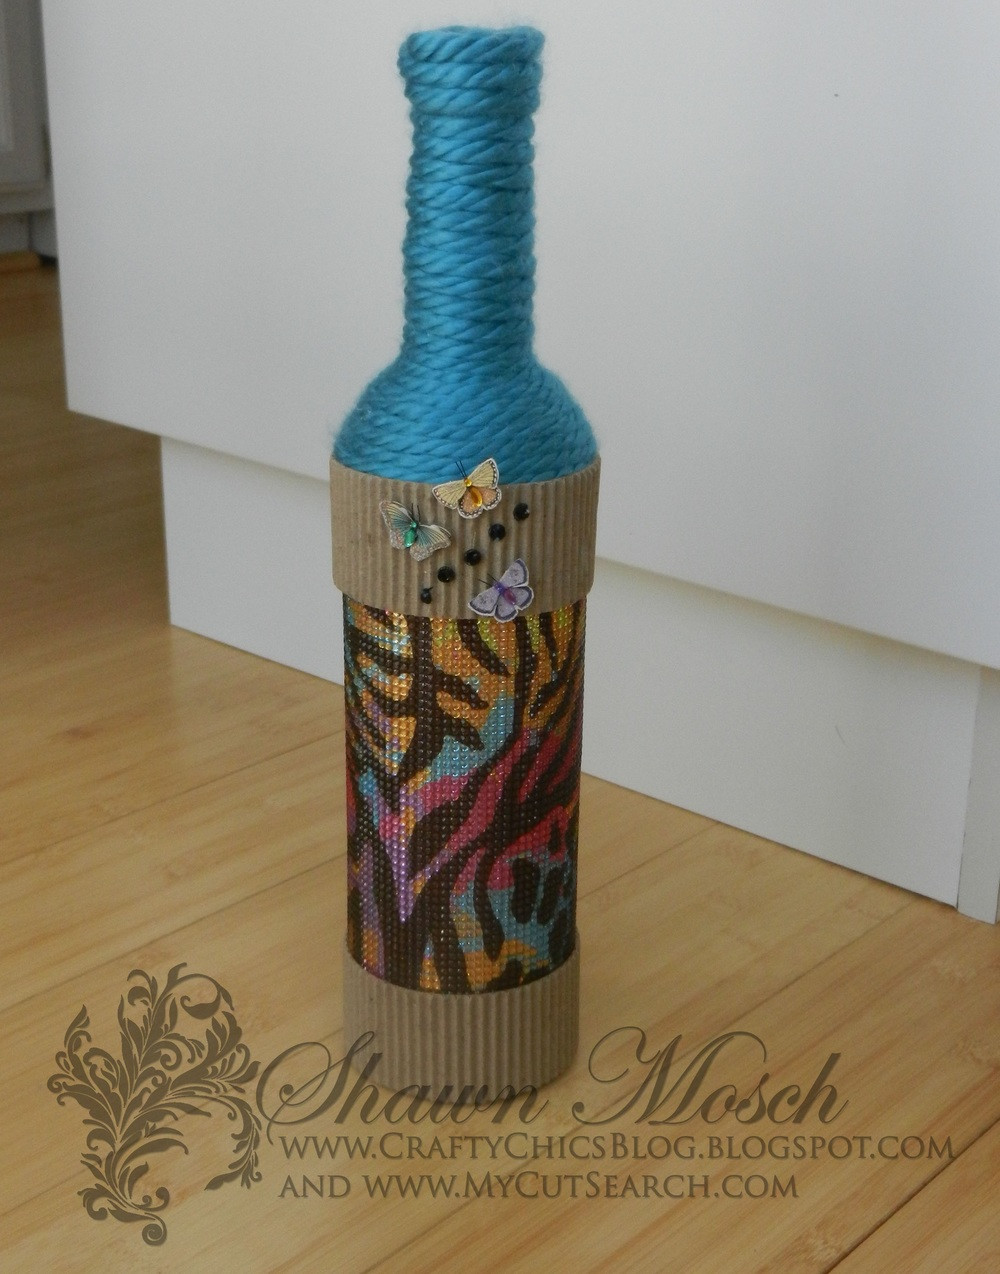 Best ideas about DIY Wine Bottle Crafts
. Save or Pin Rhinestone Embellished DIY Wine Bottle Craft Now.